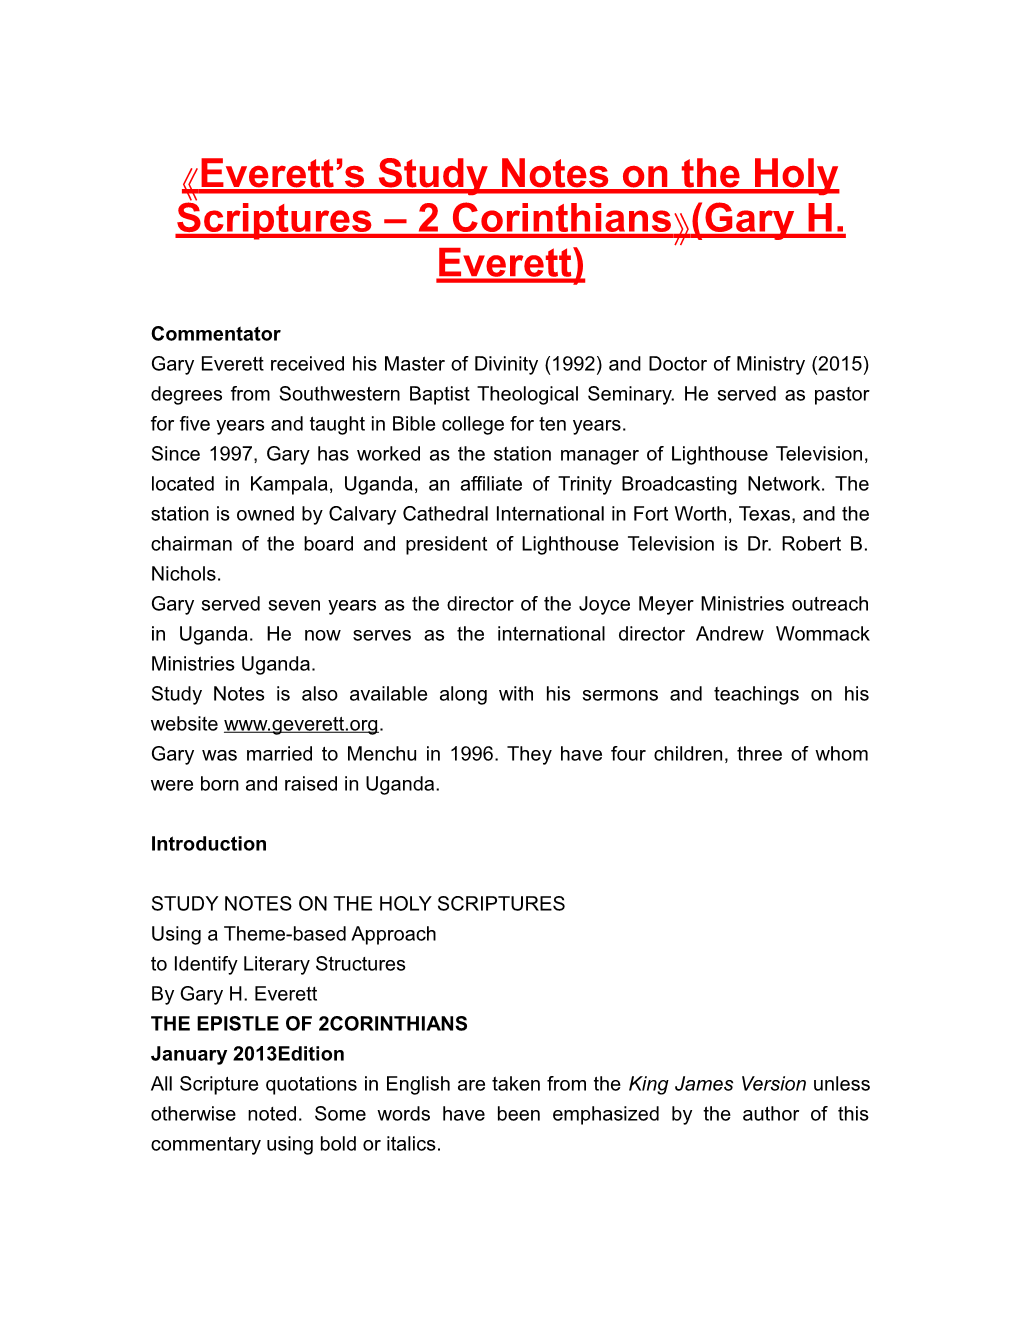 Everett S Study Notes on the Holy Scriptures 2 Corinthians (Gary H. Everett)